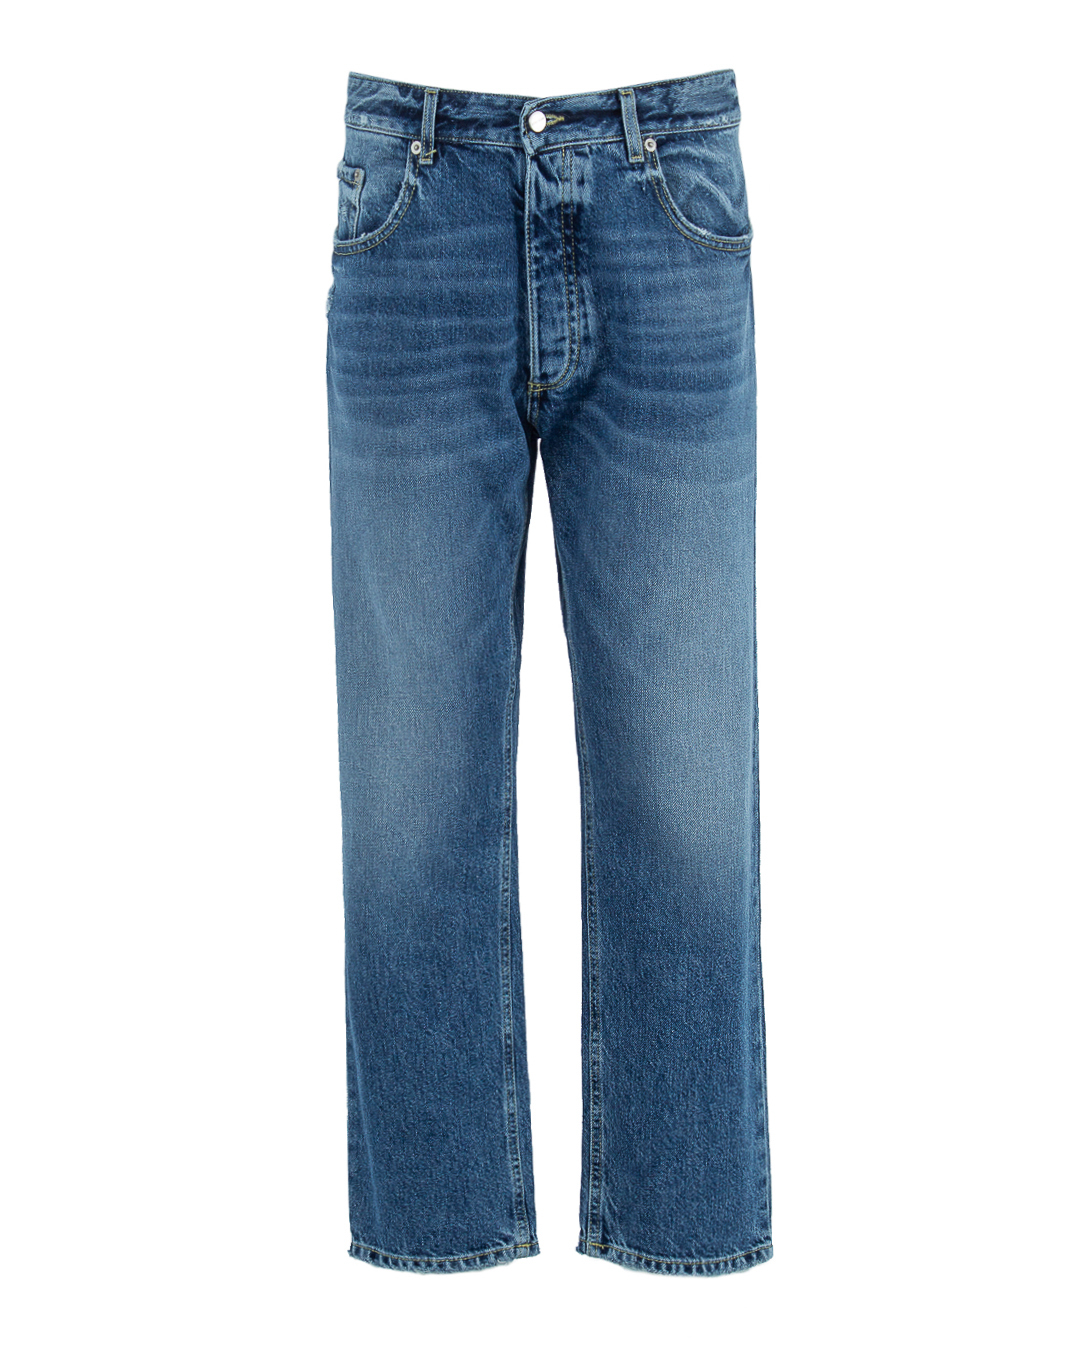 джинсы ICON DENIM JOSHID749 синий 38, размер 38 - фото 1